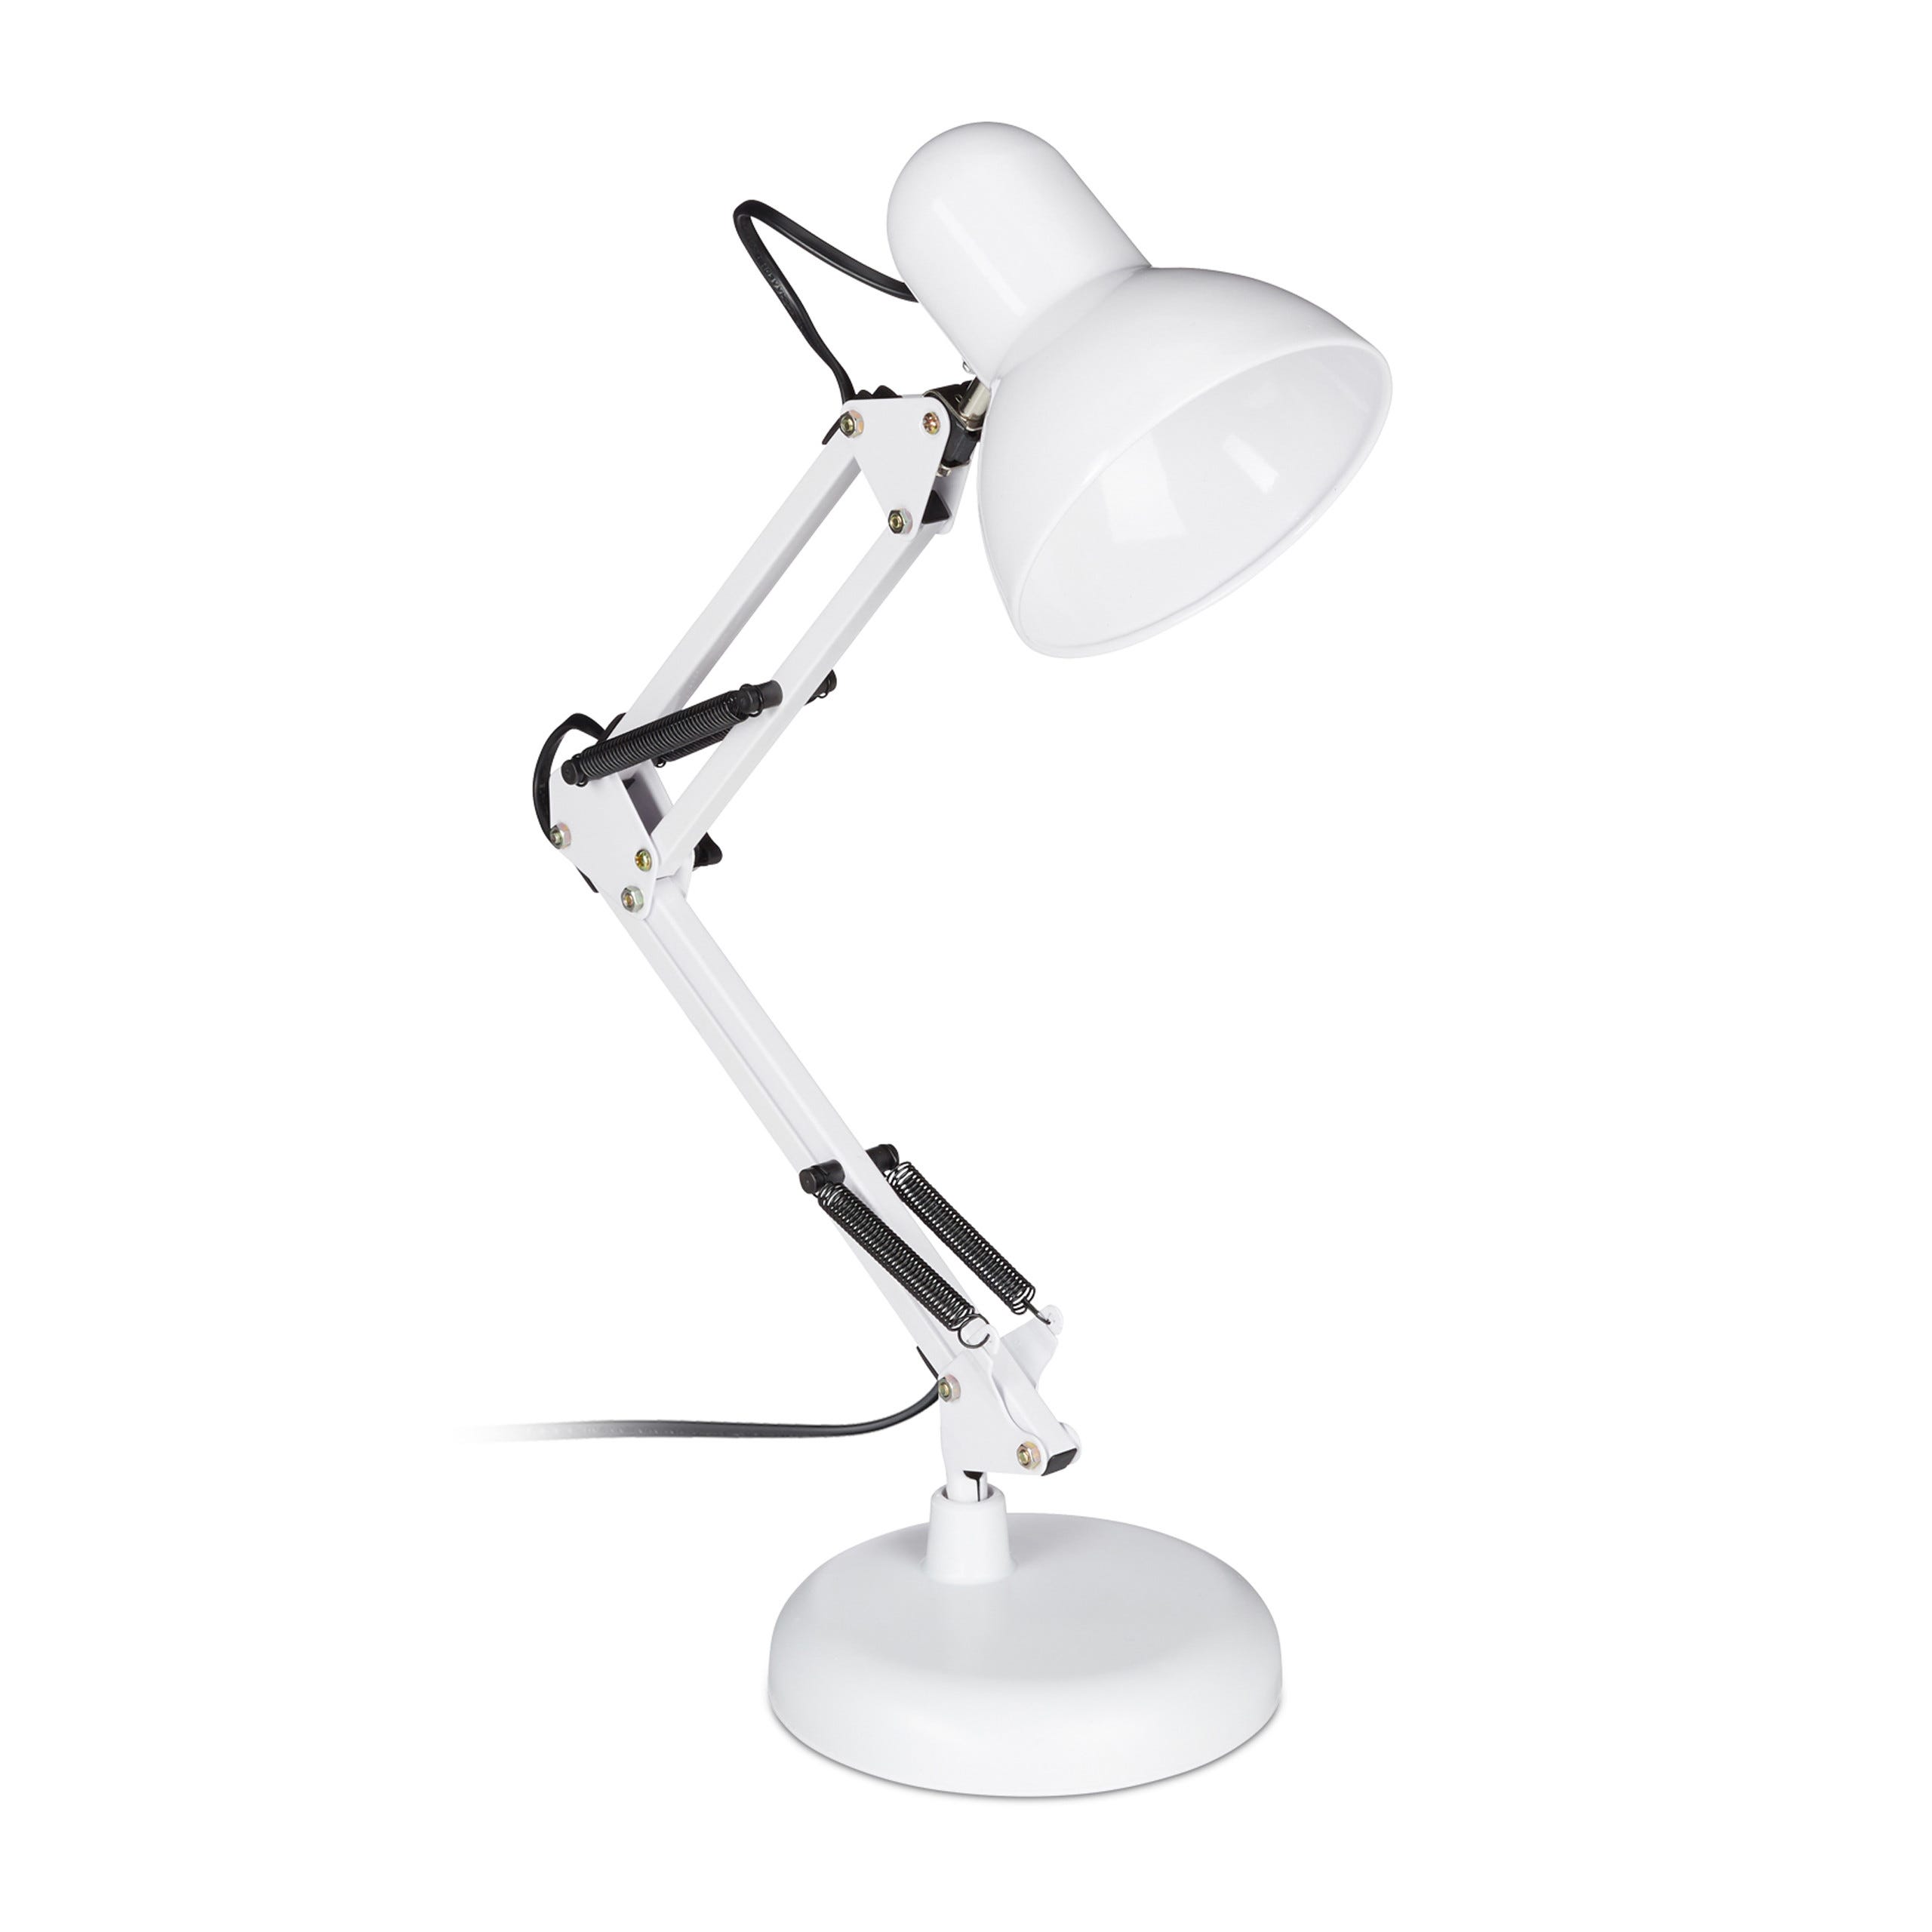 Relaxdays Lampe bureau retro, bras articulé flexible,Veilleuse lecture  Bureau, métal, E27, HlP: 50x27x15 cm,blanche